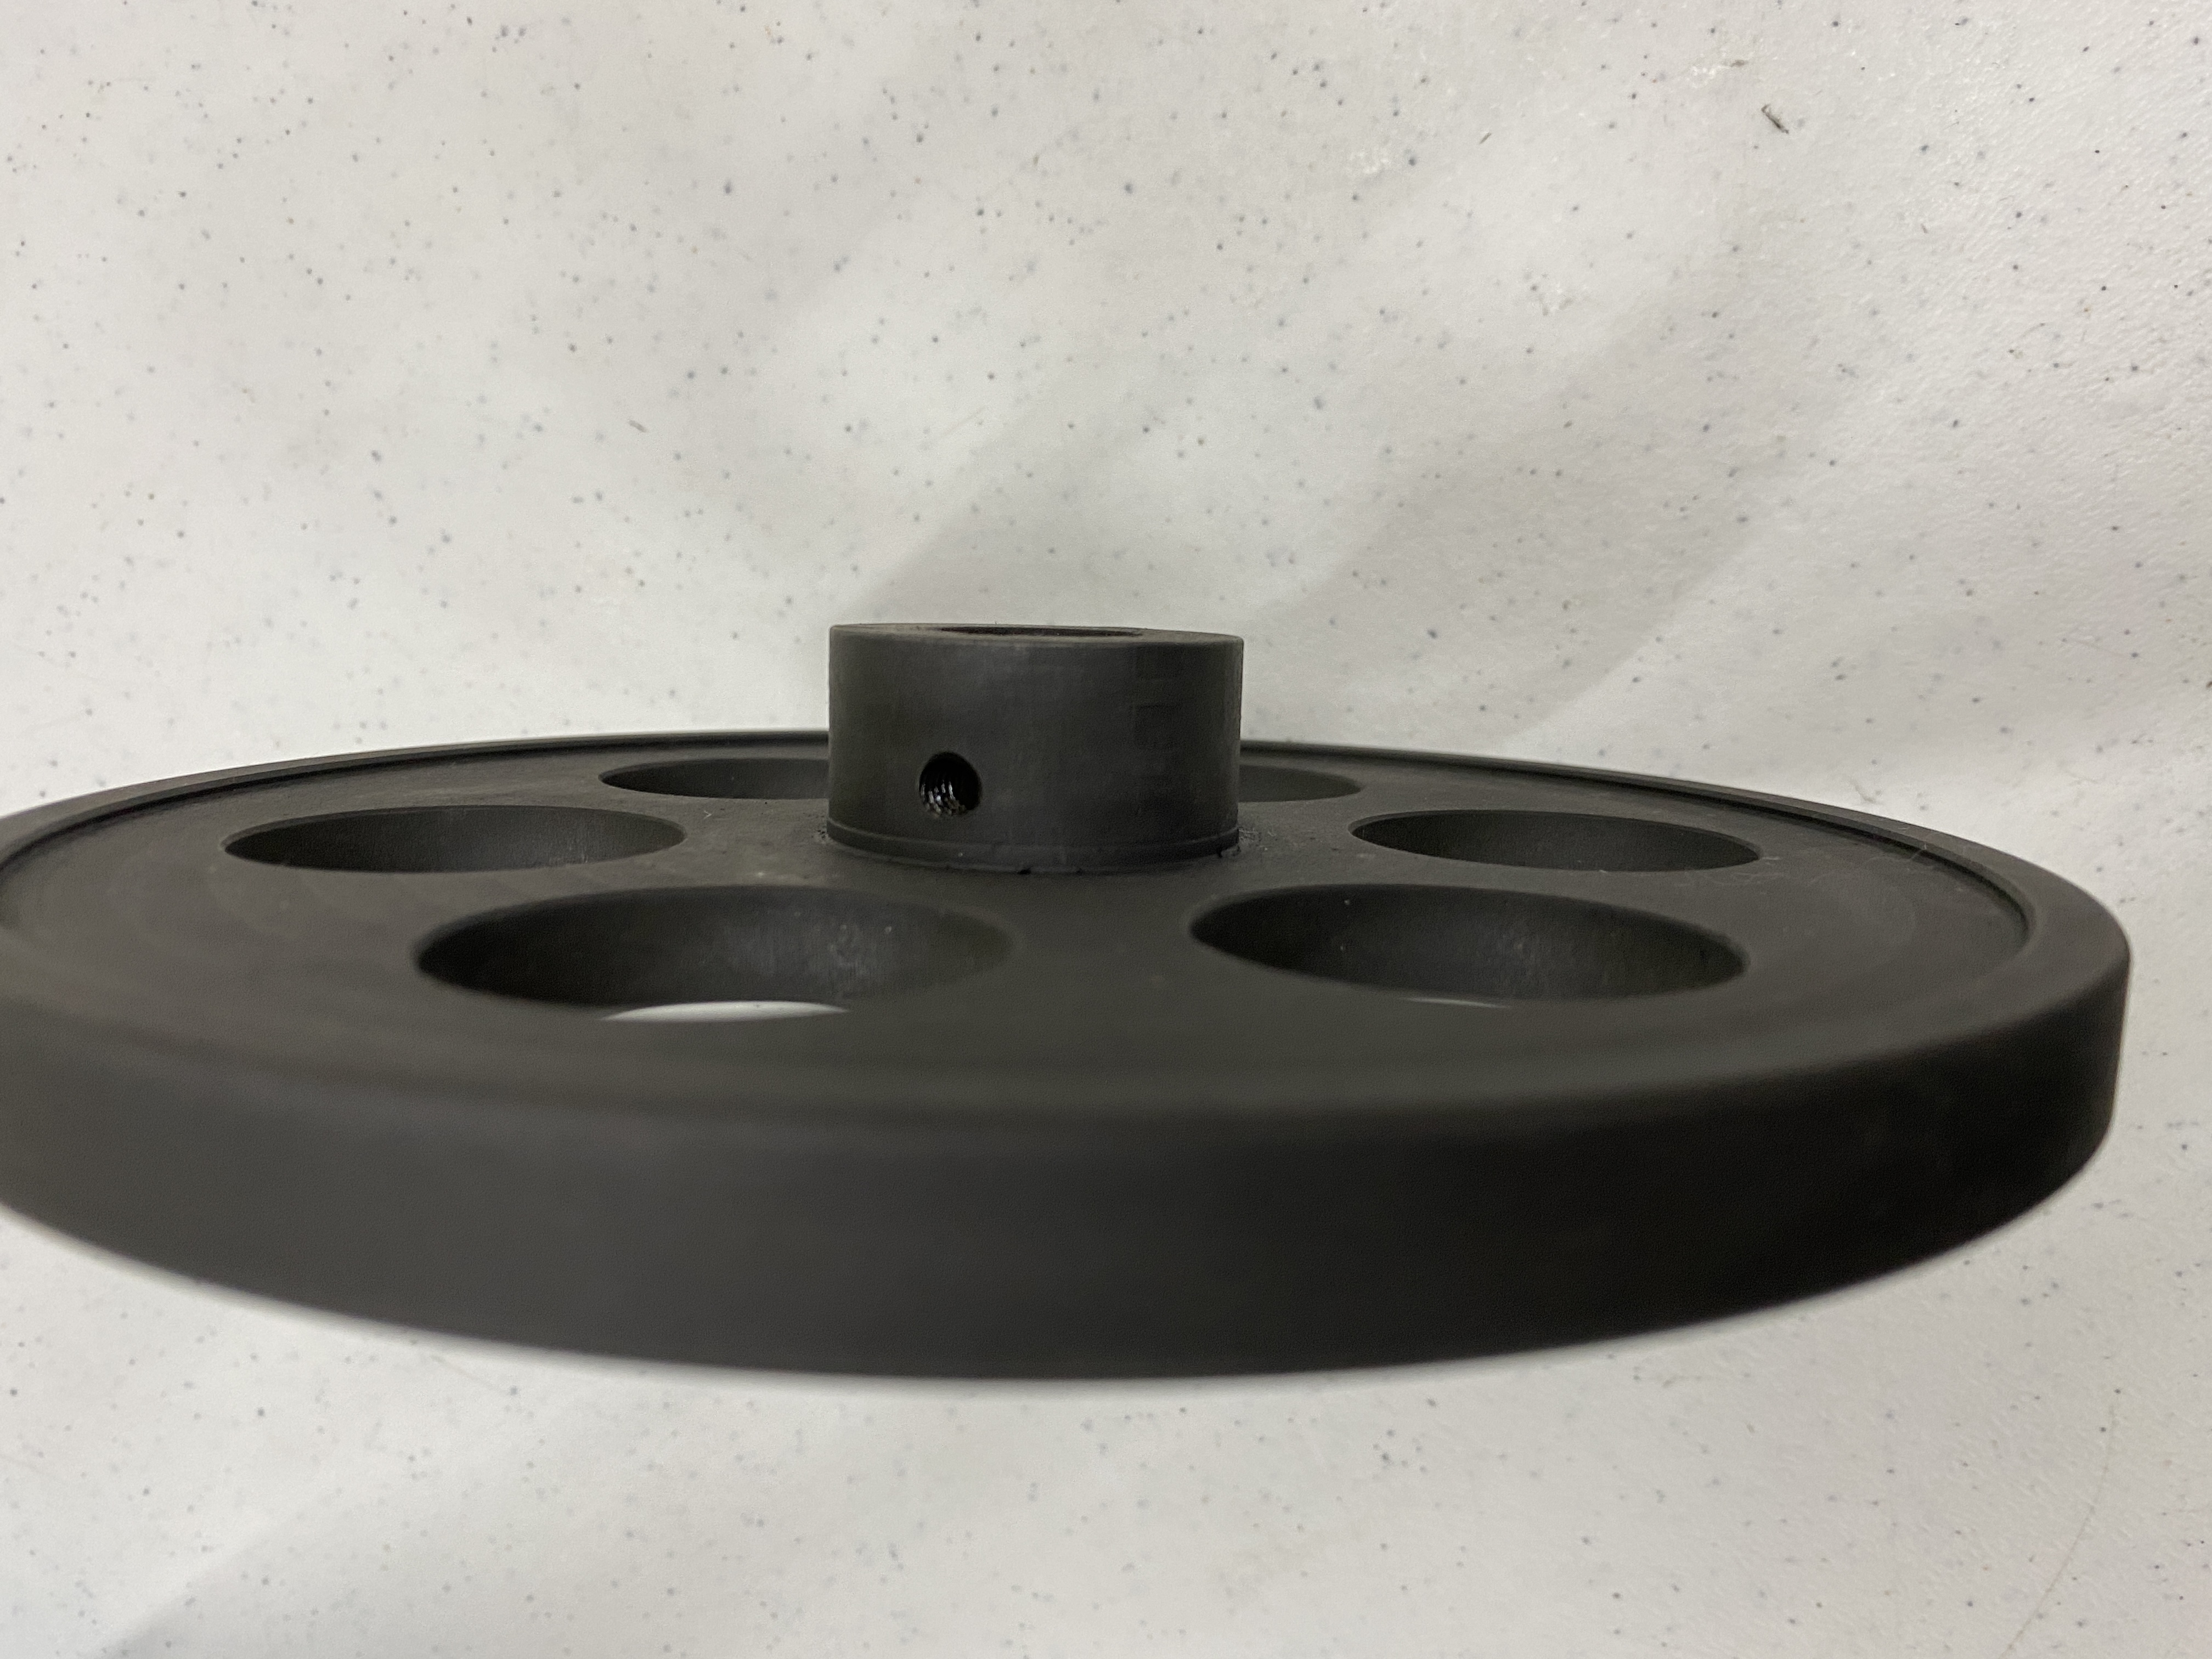 Hardened smooth measuring wheel 22” circumference.